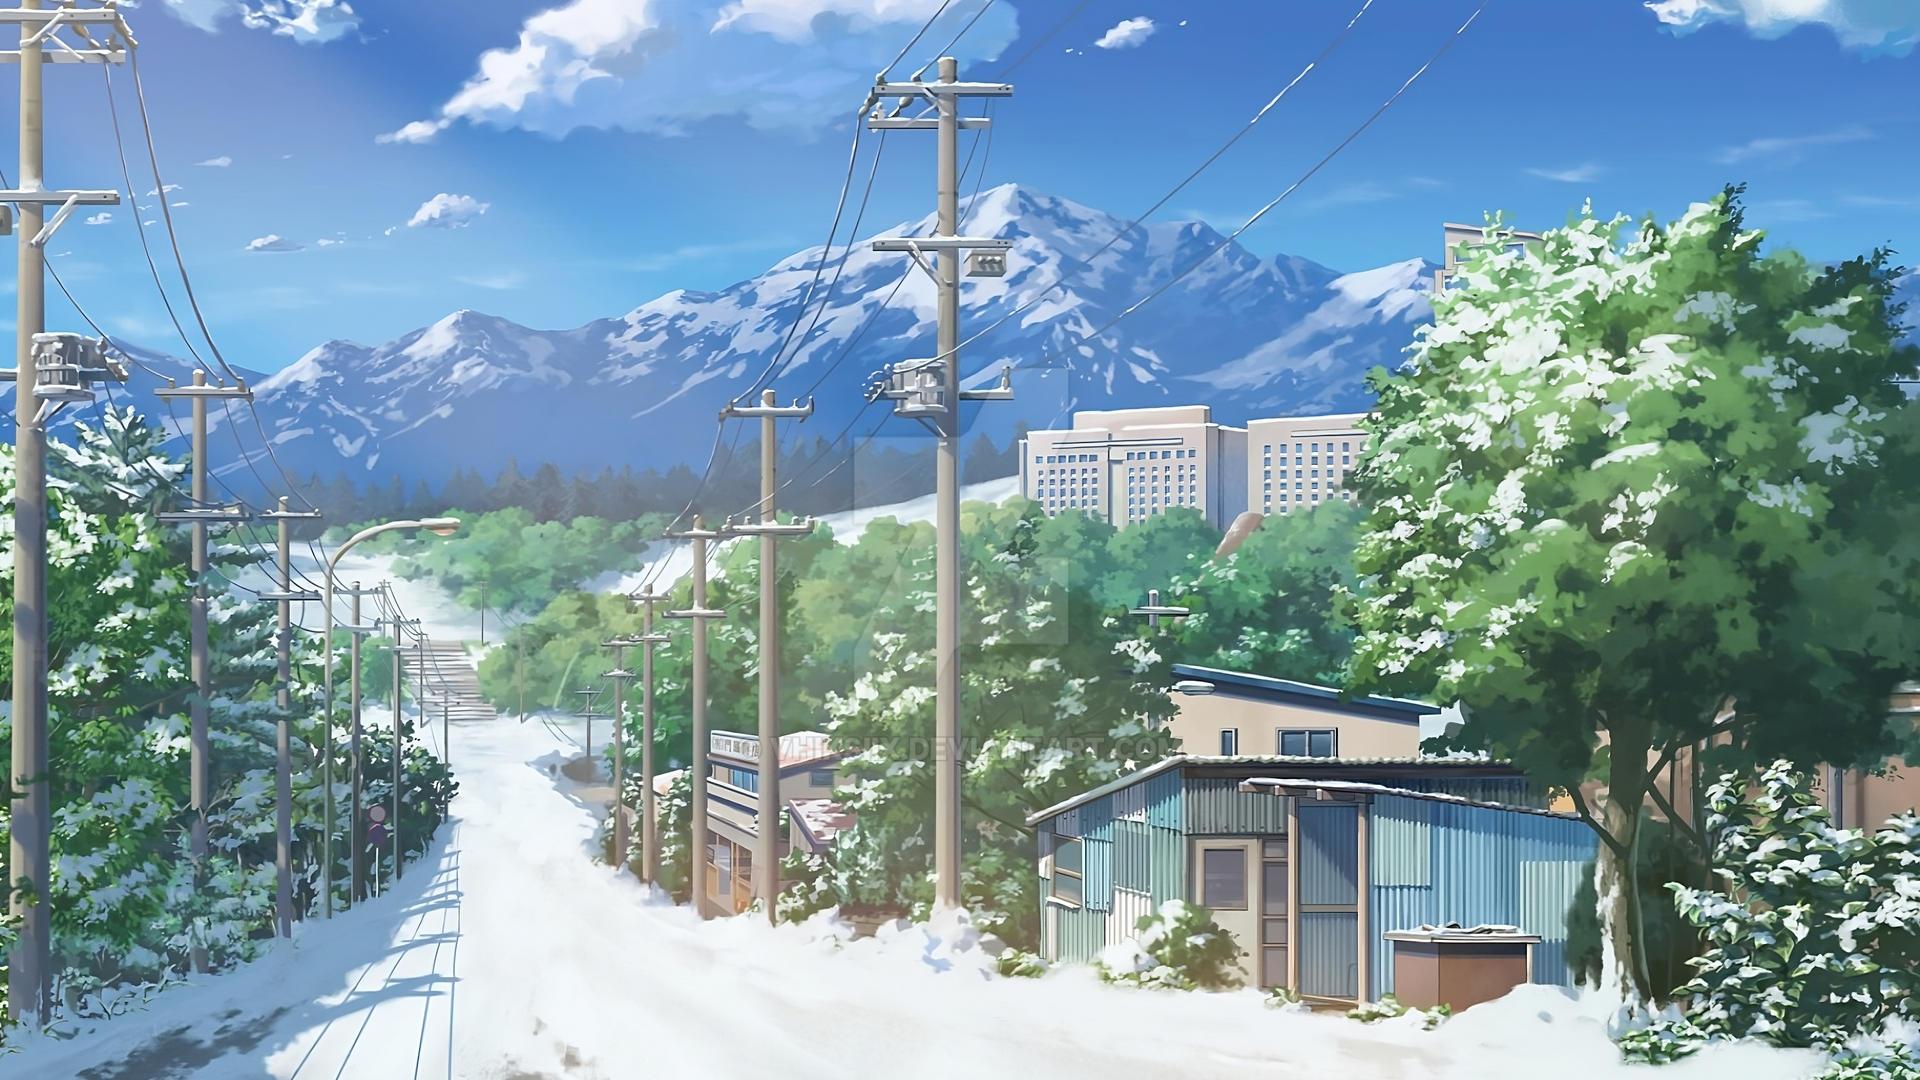 Winter Anime Landscape Wallpaper By Vhiksiix